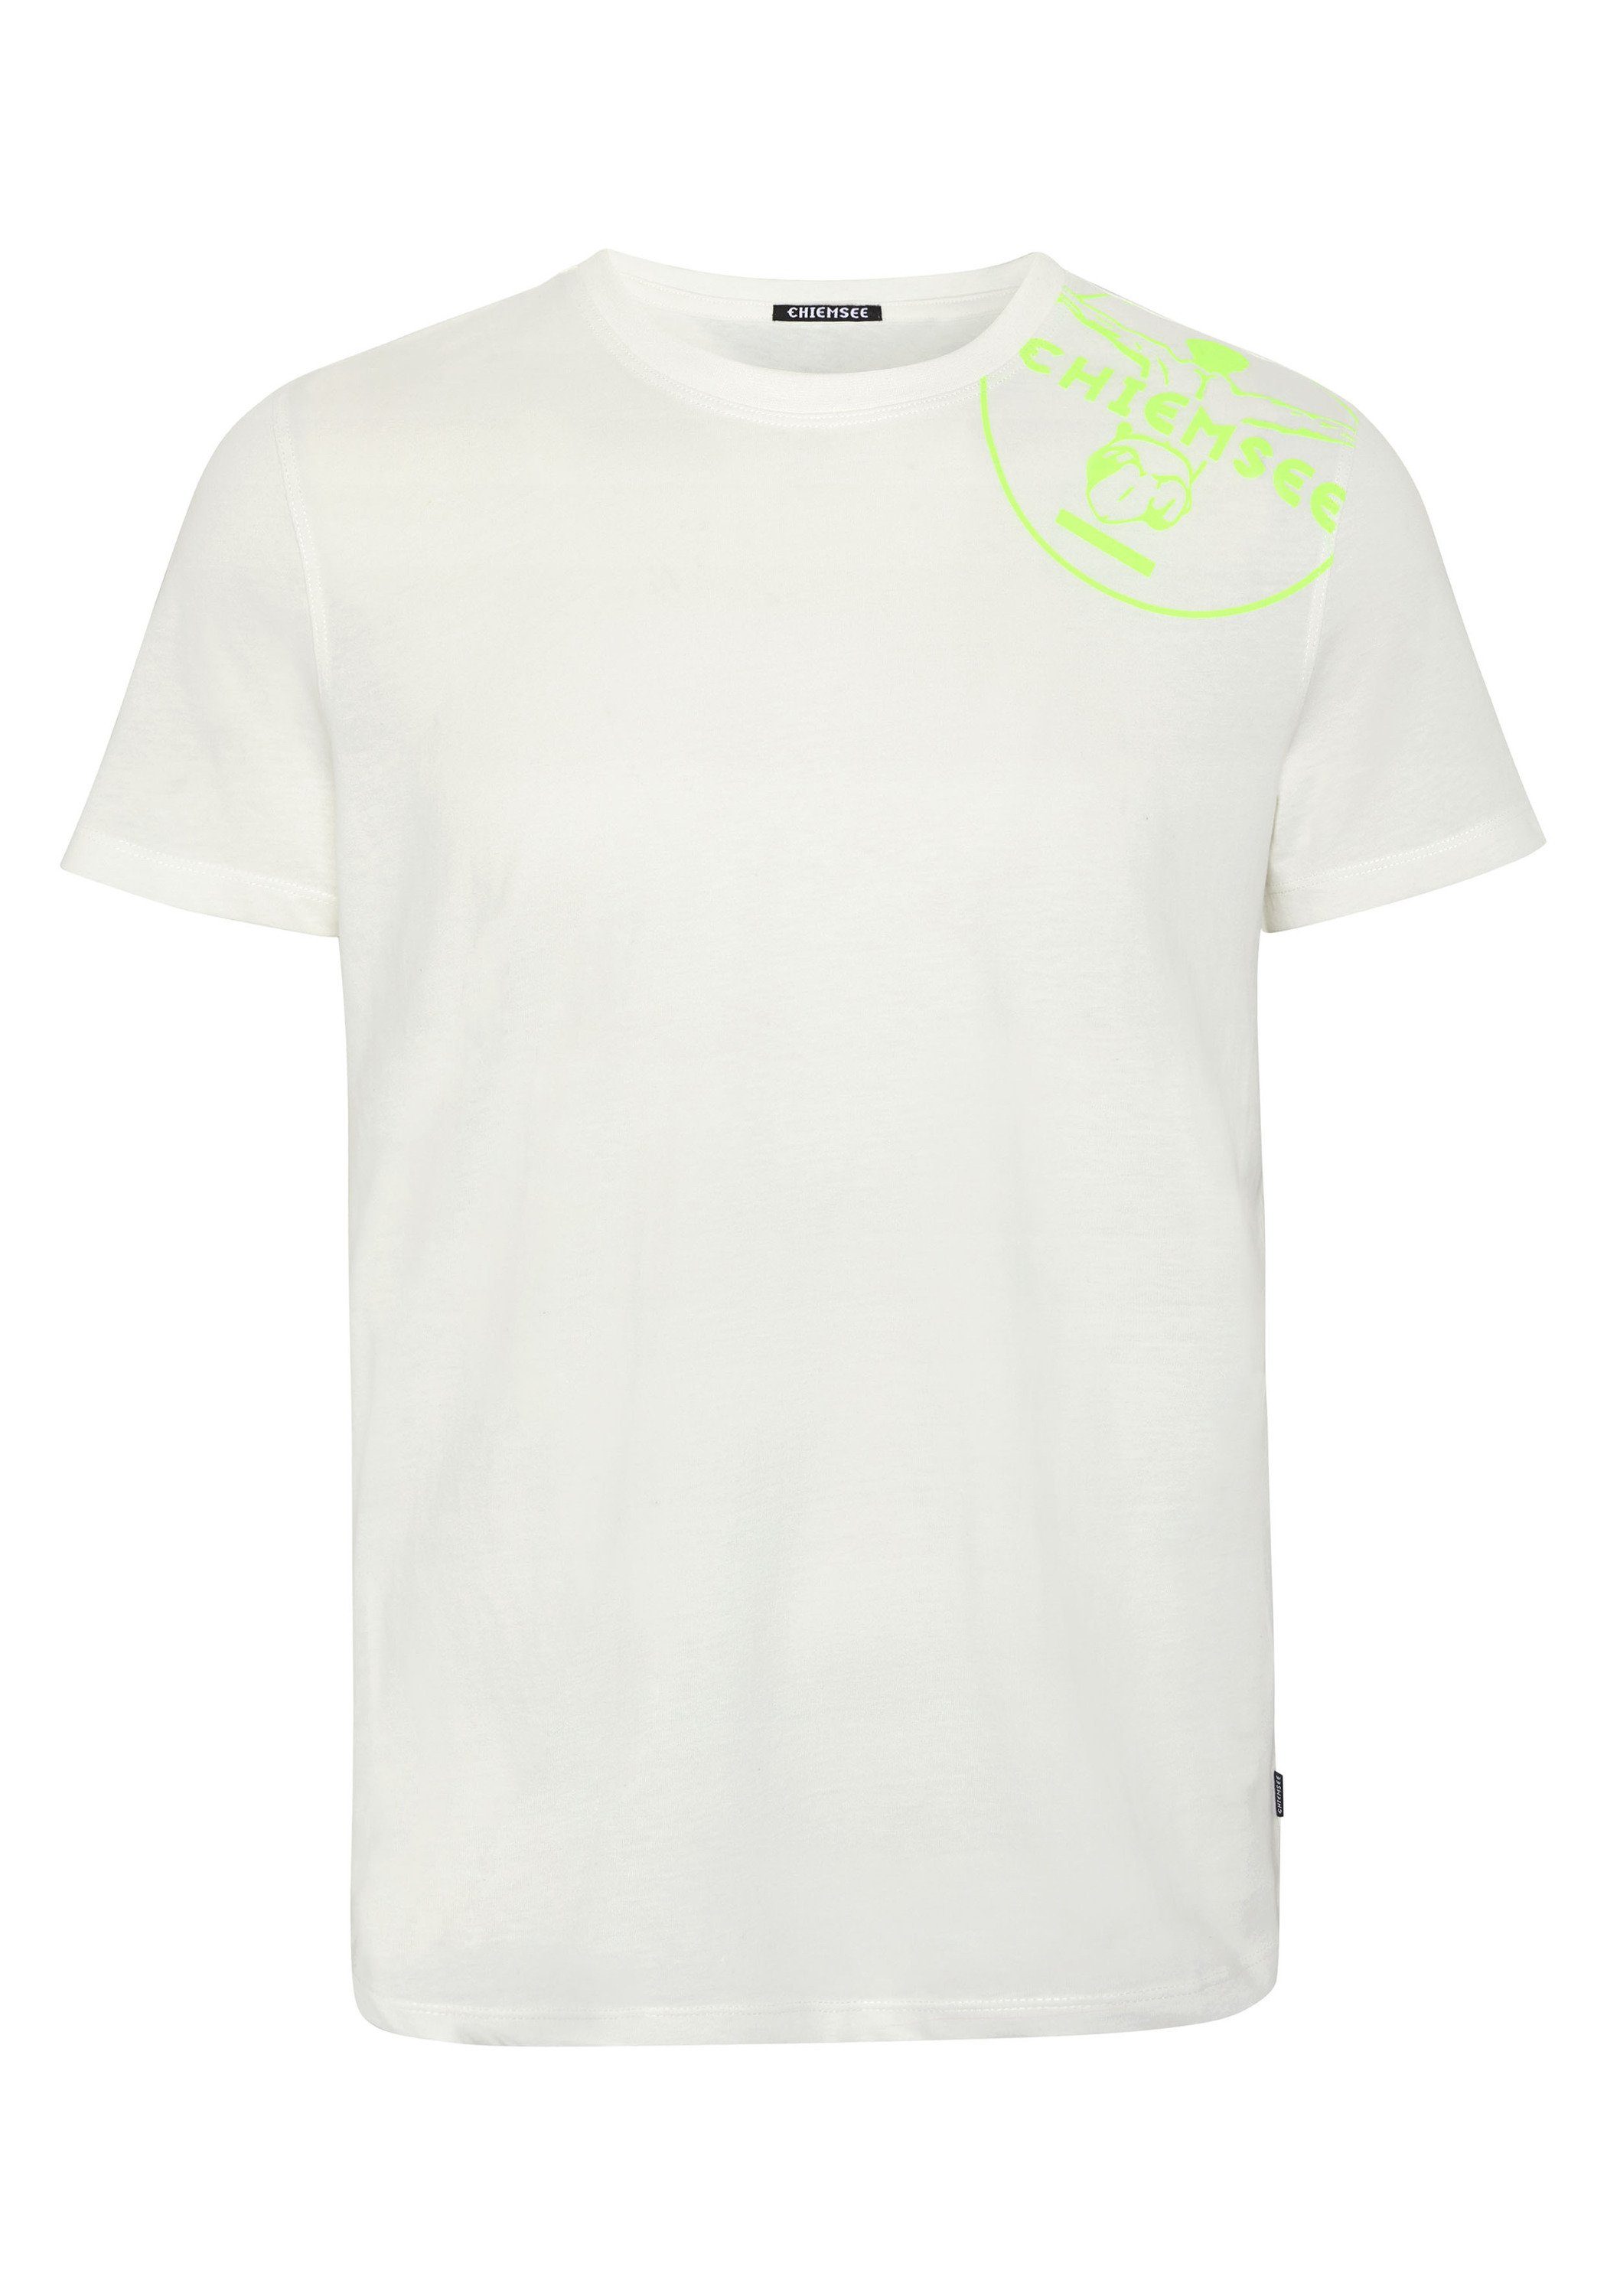 Chiemsee Print-Shirt T-Shirt mit Jumper-Motiv 1 Star White